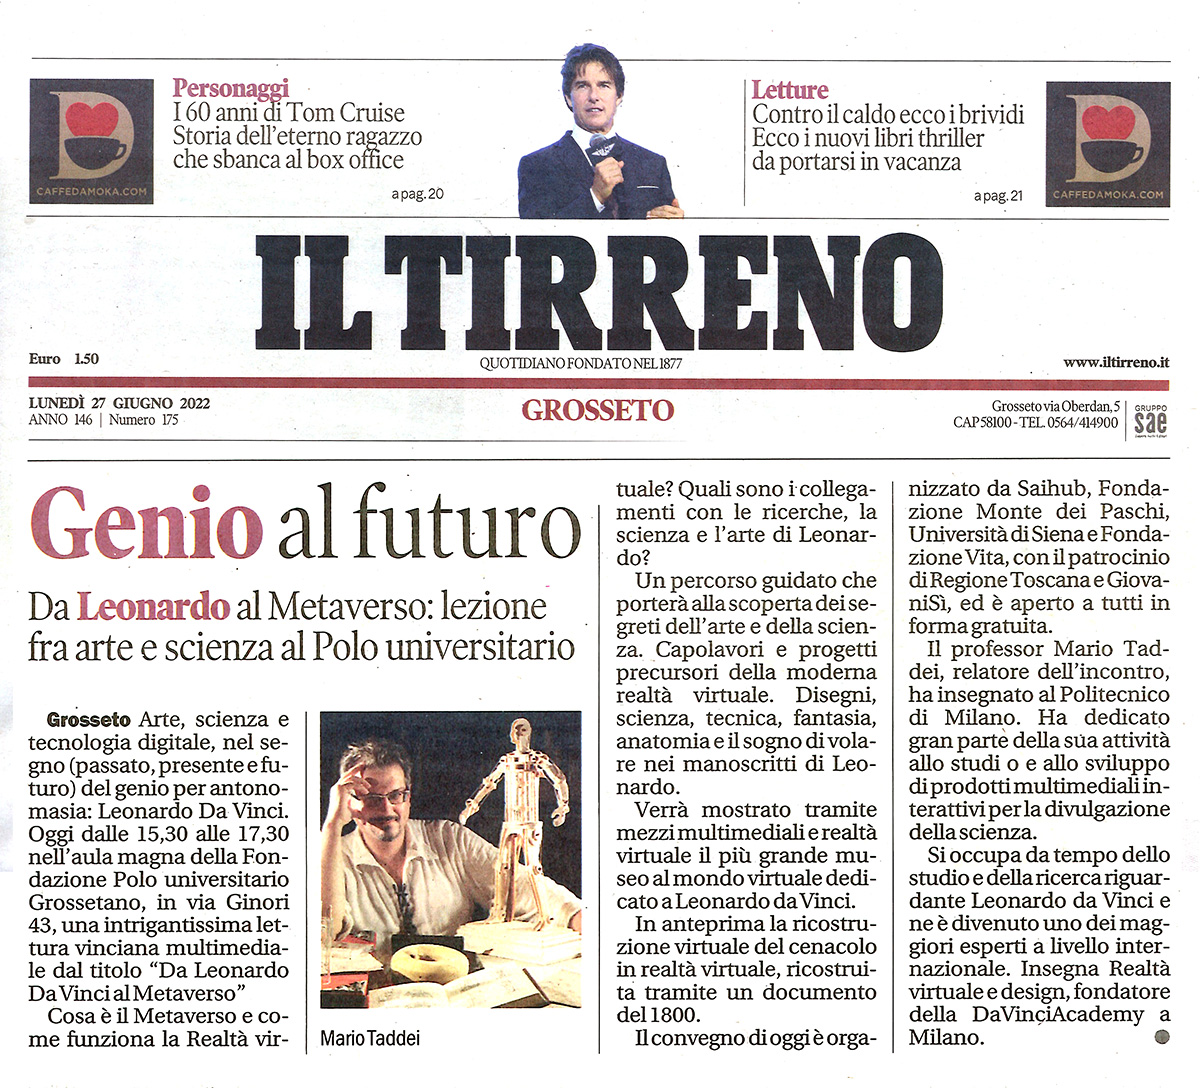 2022 06 27 press Il Tirreno - Leonardo da Vinci ACADEMY Mario Taddei 1200